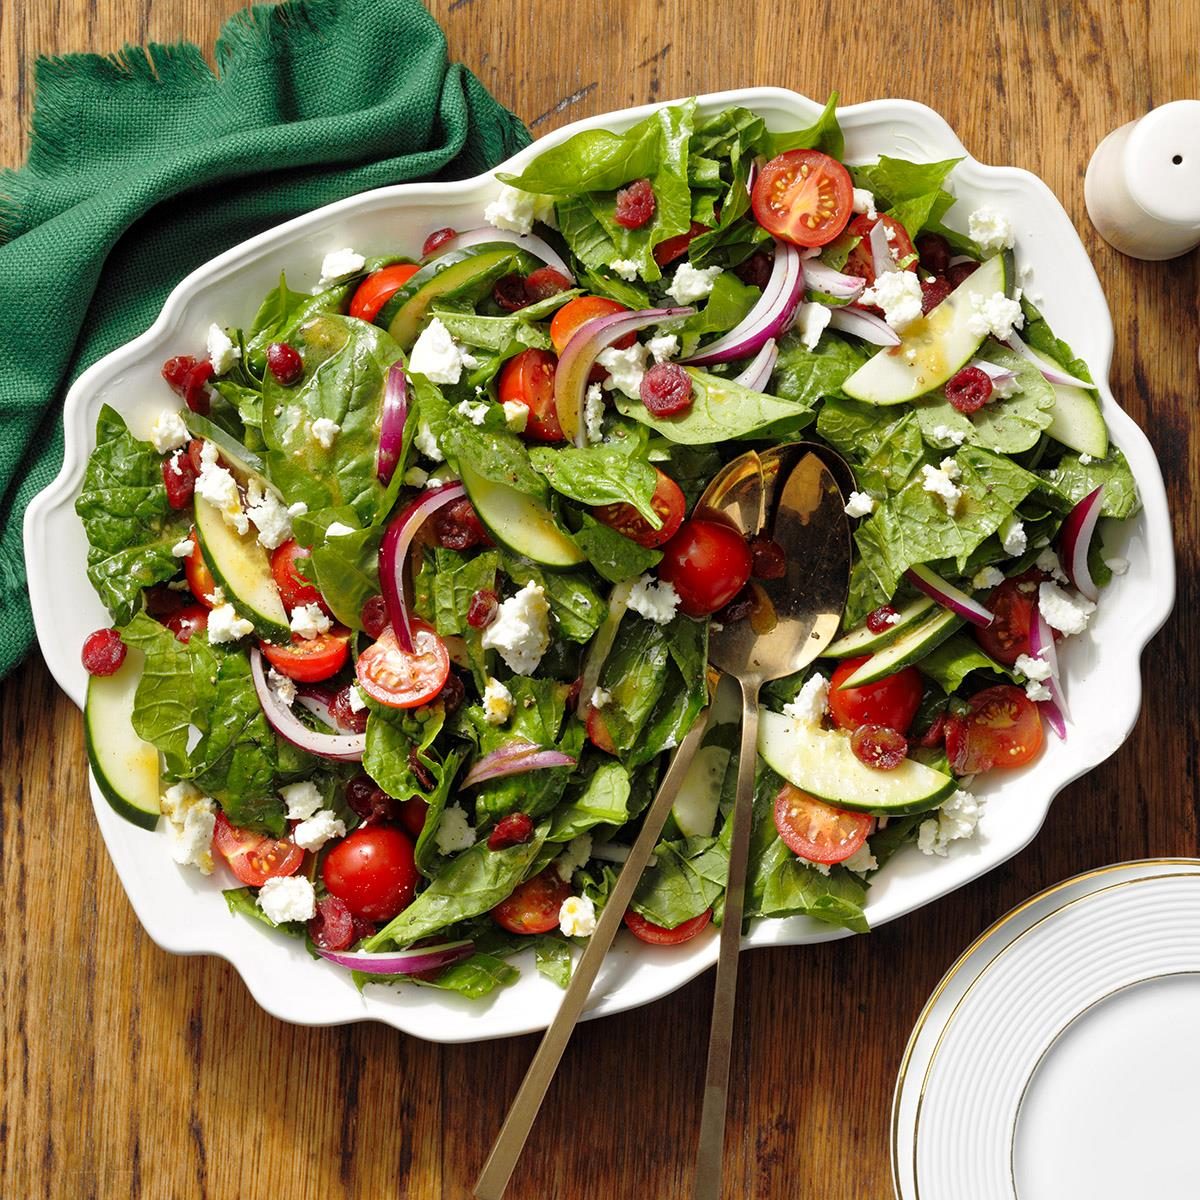 Turnip Greens Salad Recipe: How to Make It